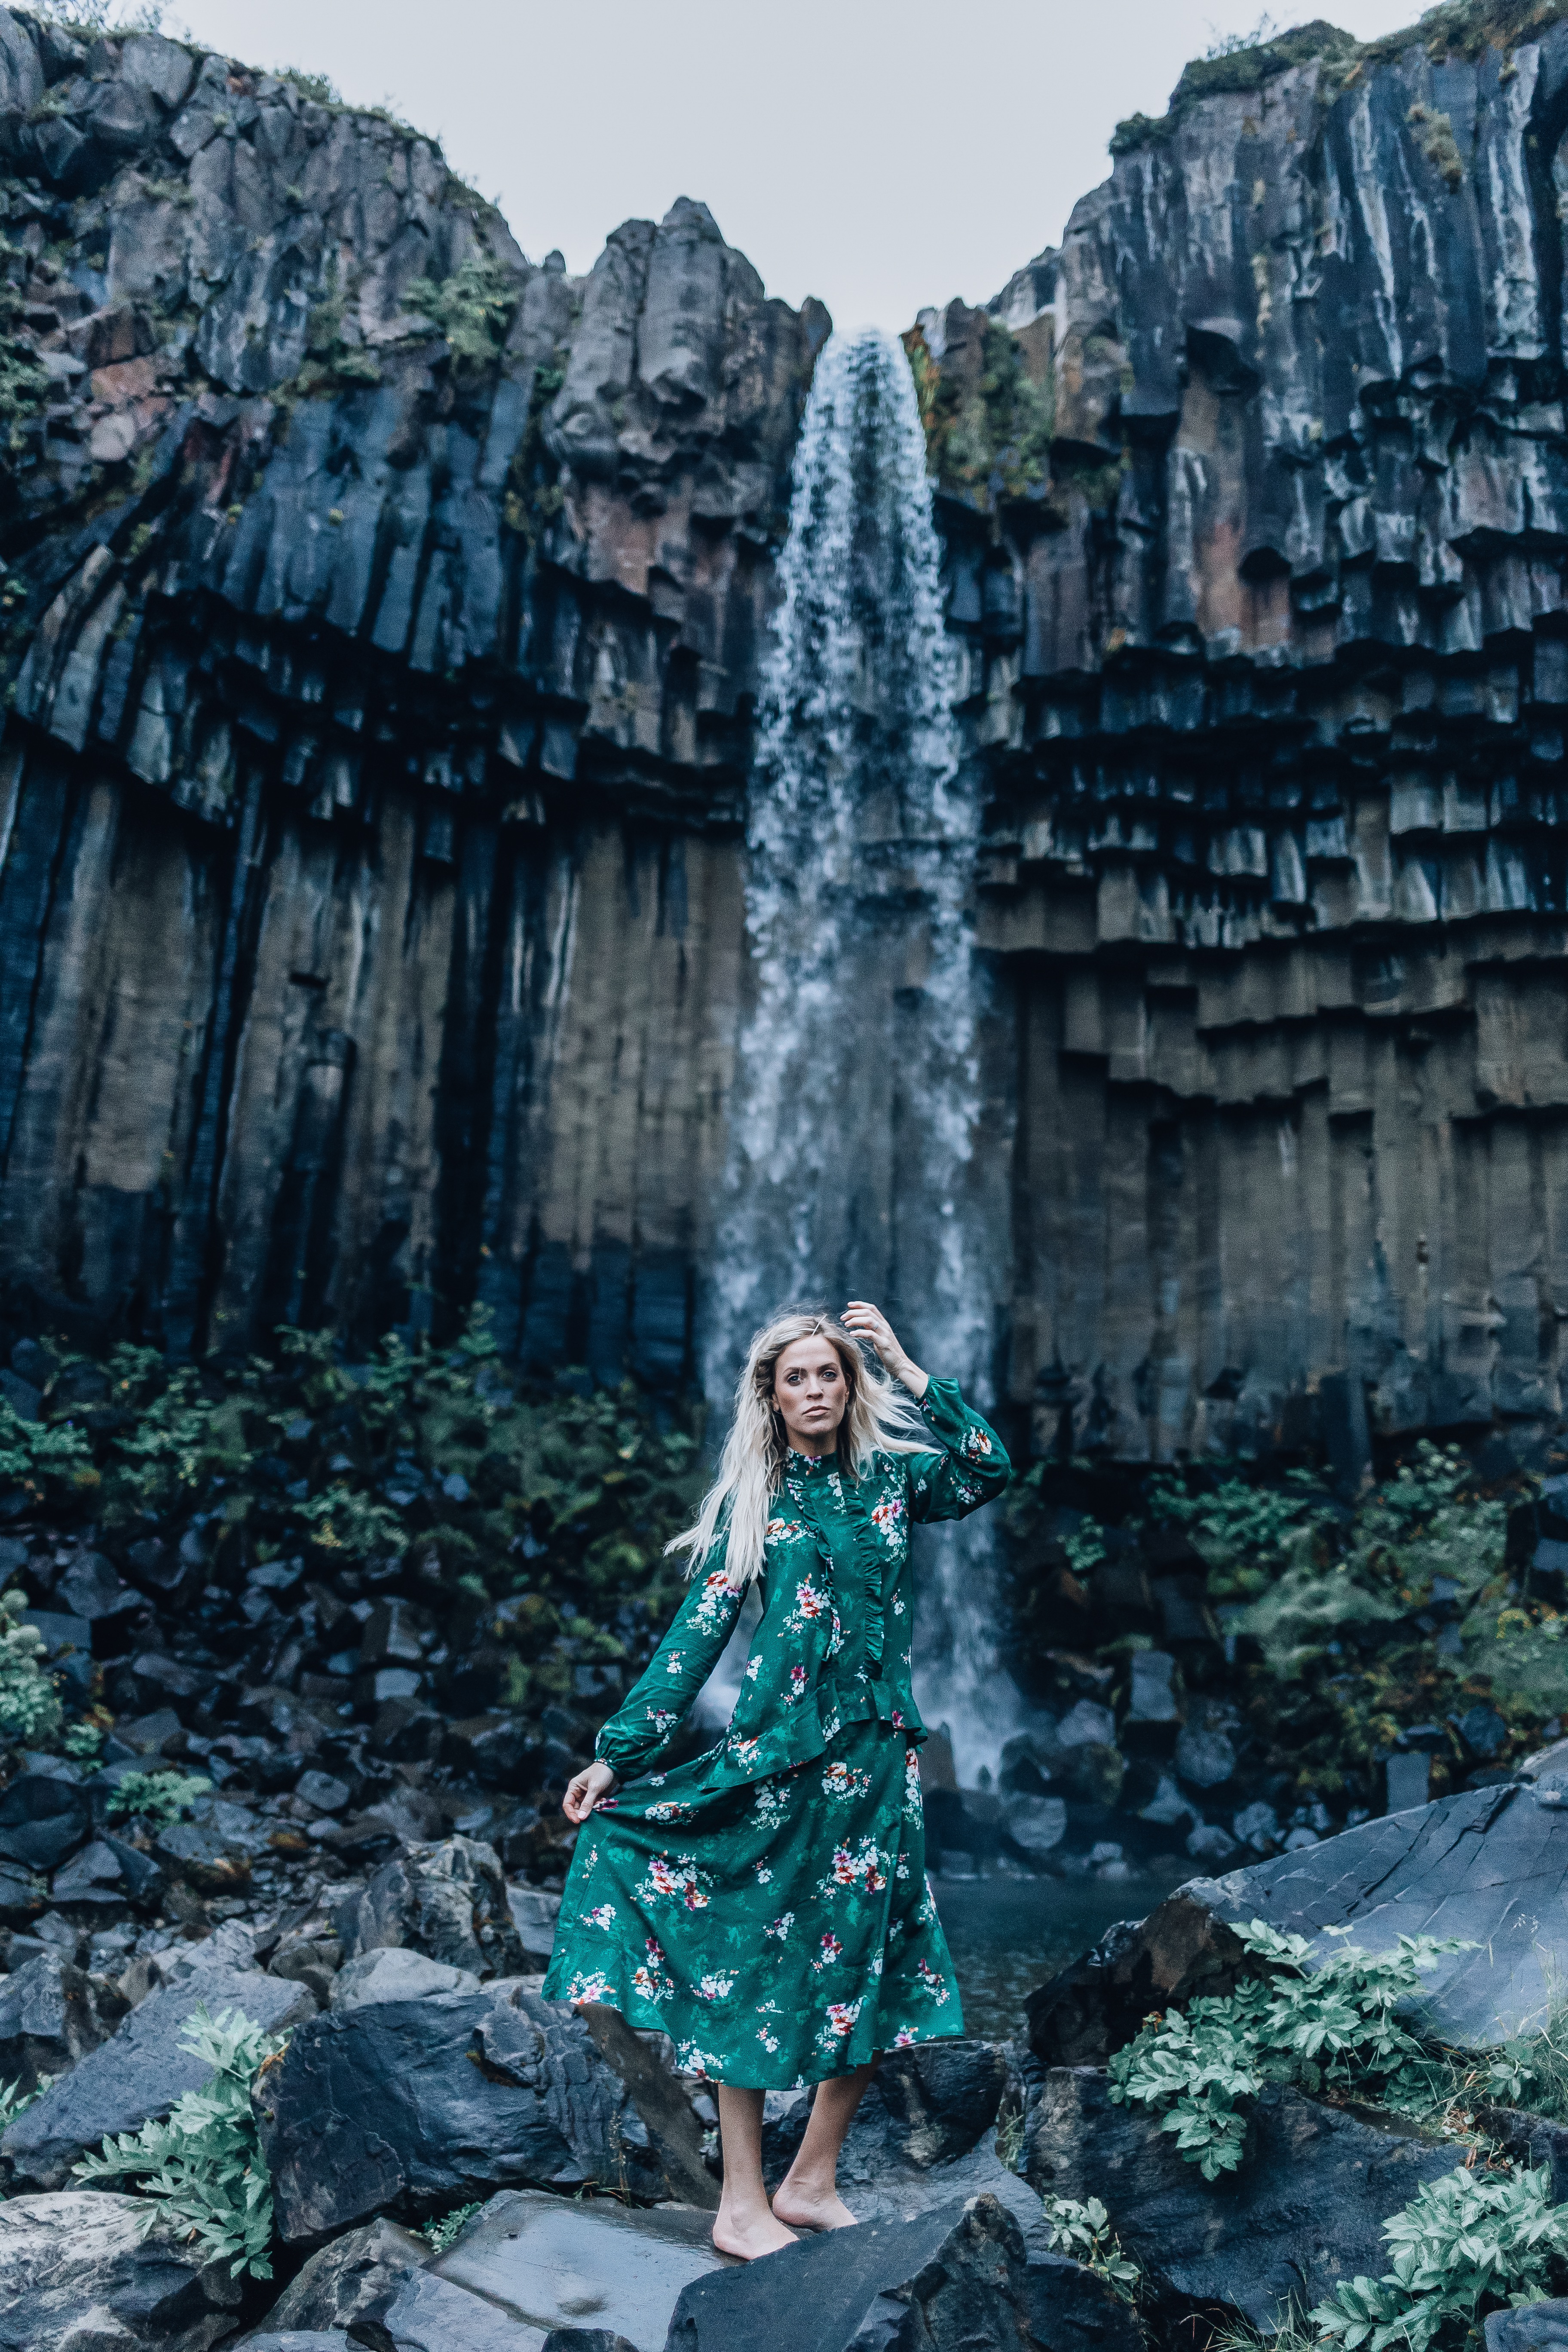 Beautiful waterfall views in Iceland